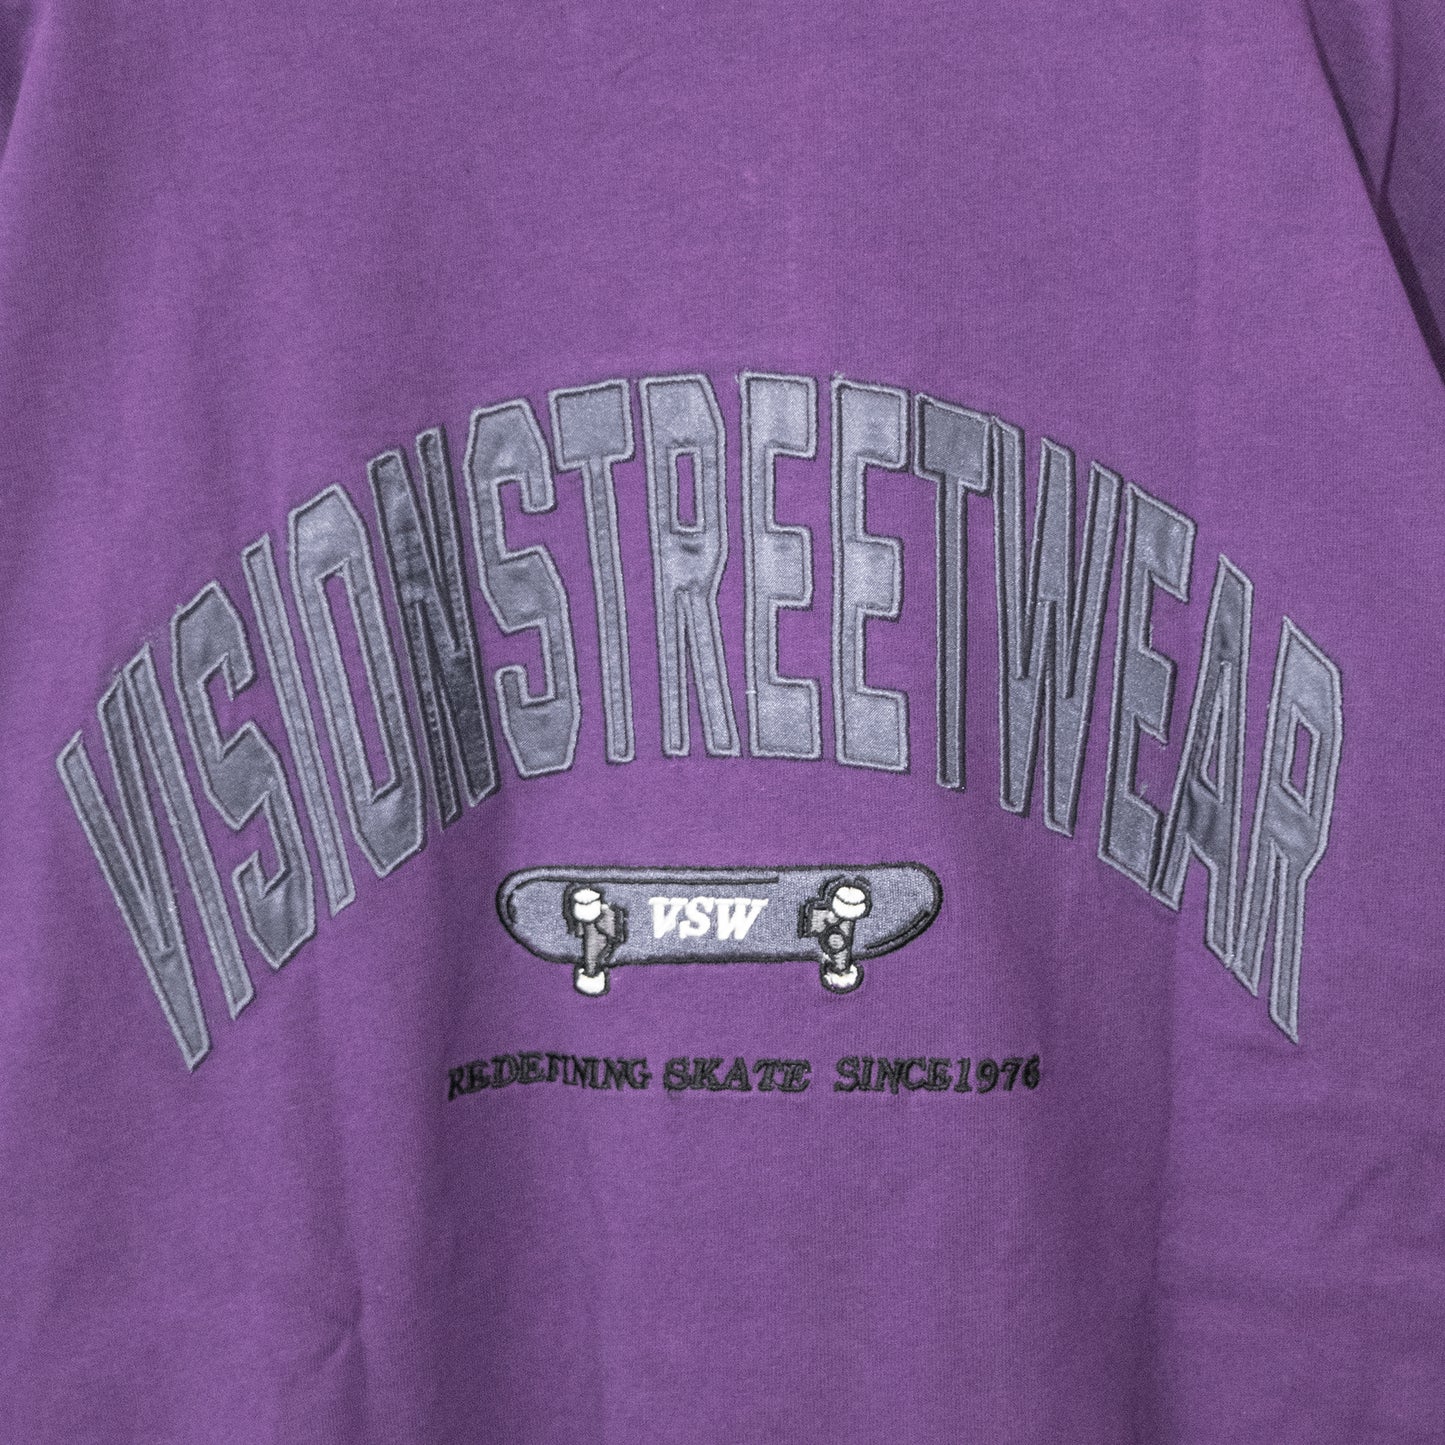 VISION STREET WEAR サテンワッペン 半袖Tシャツ PURPLE